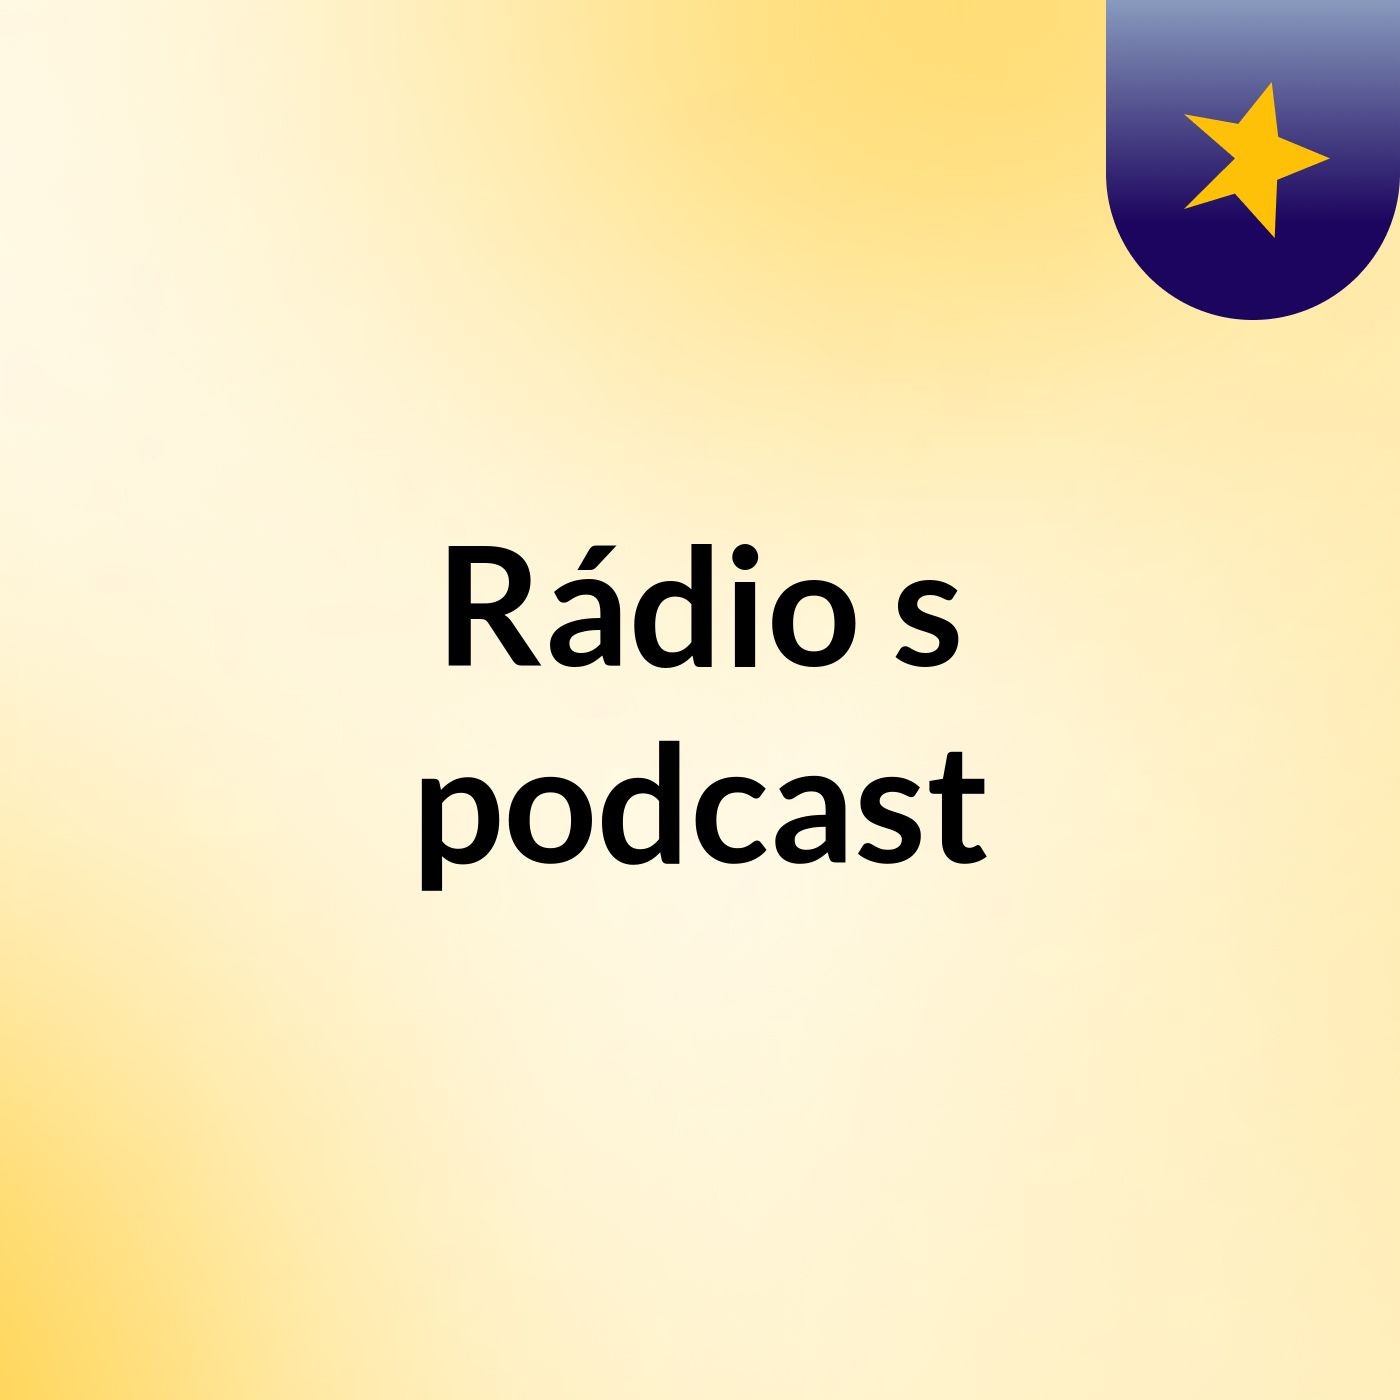 Rádio's podcast